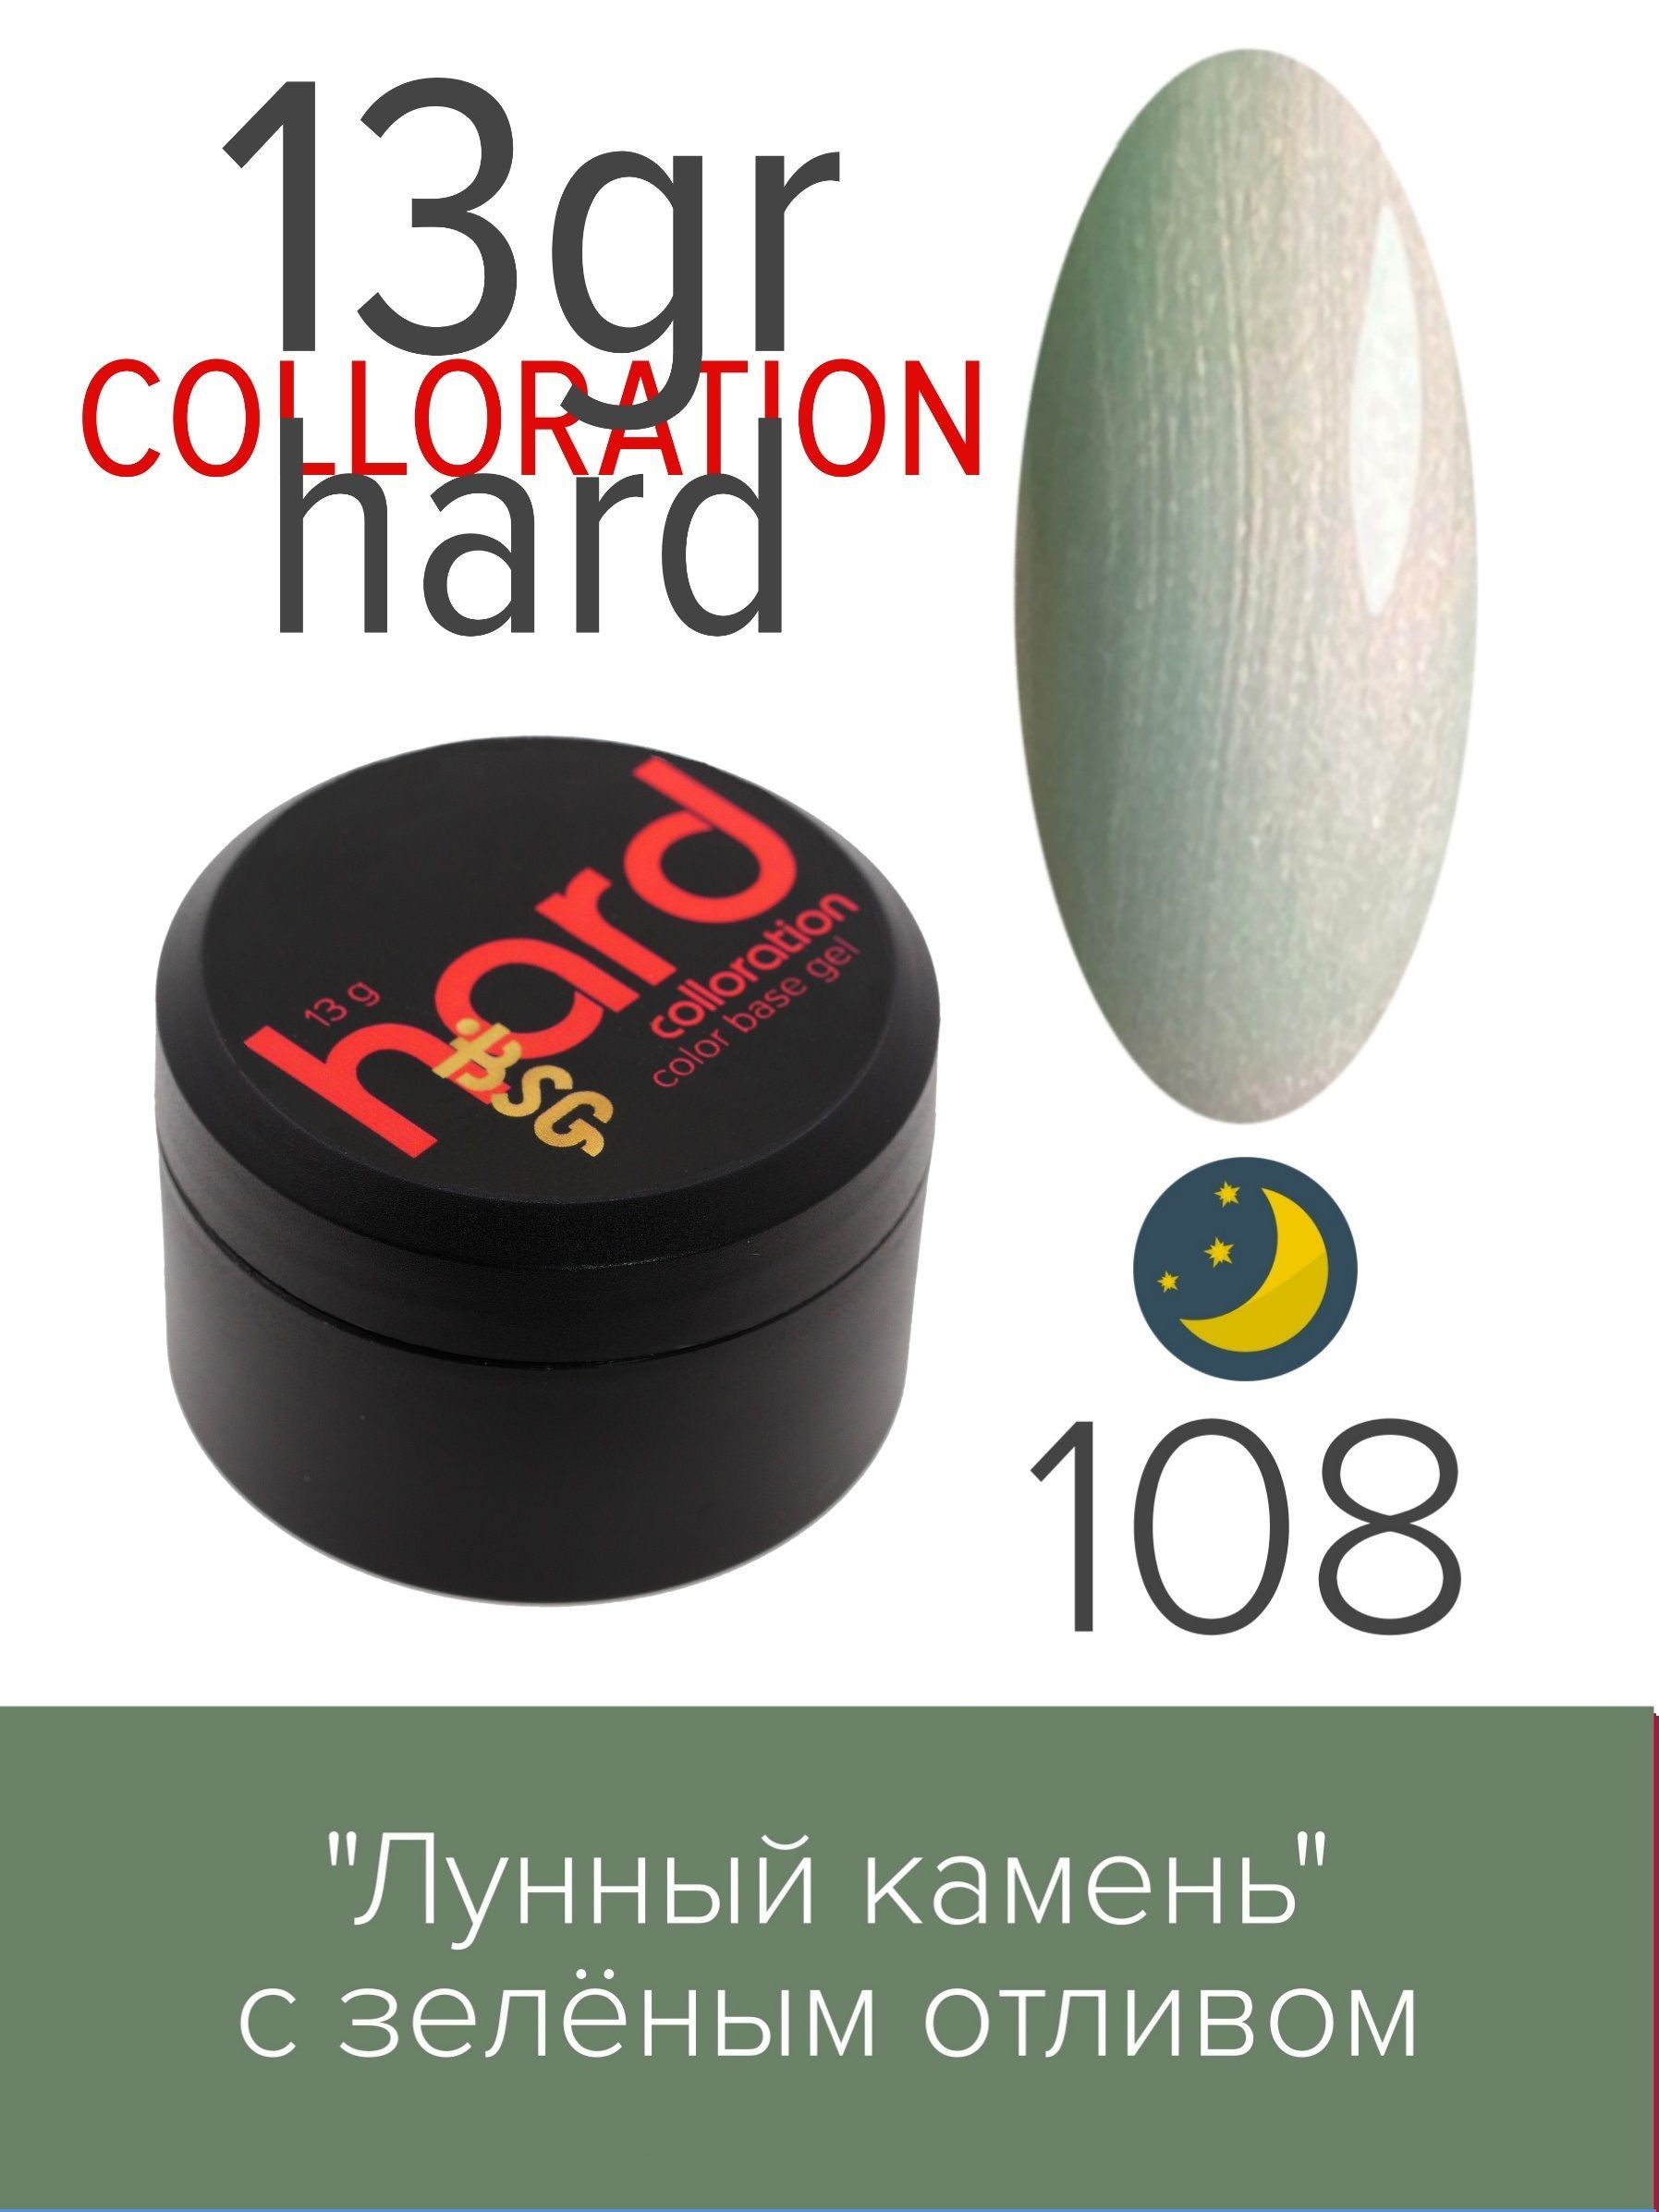 База BSG Colloration Hard цветная жесткая №108 комплект ных жестких баз bsg colloration hard лунный камень